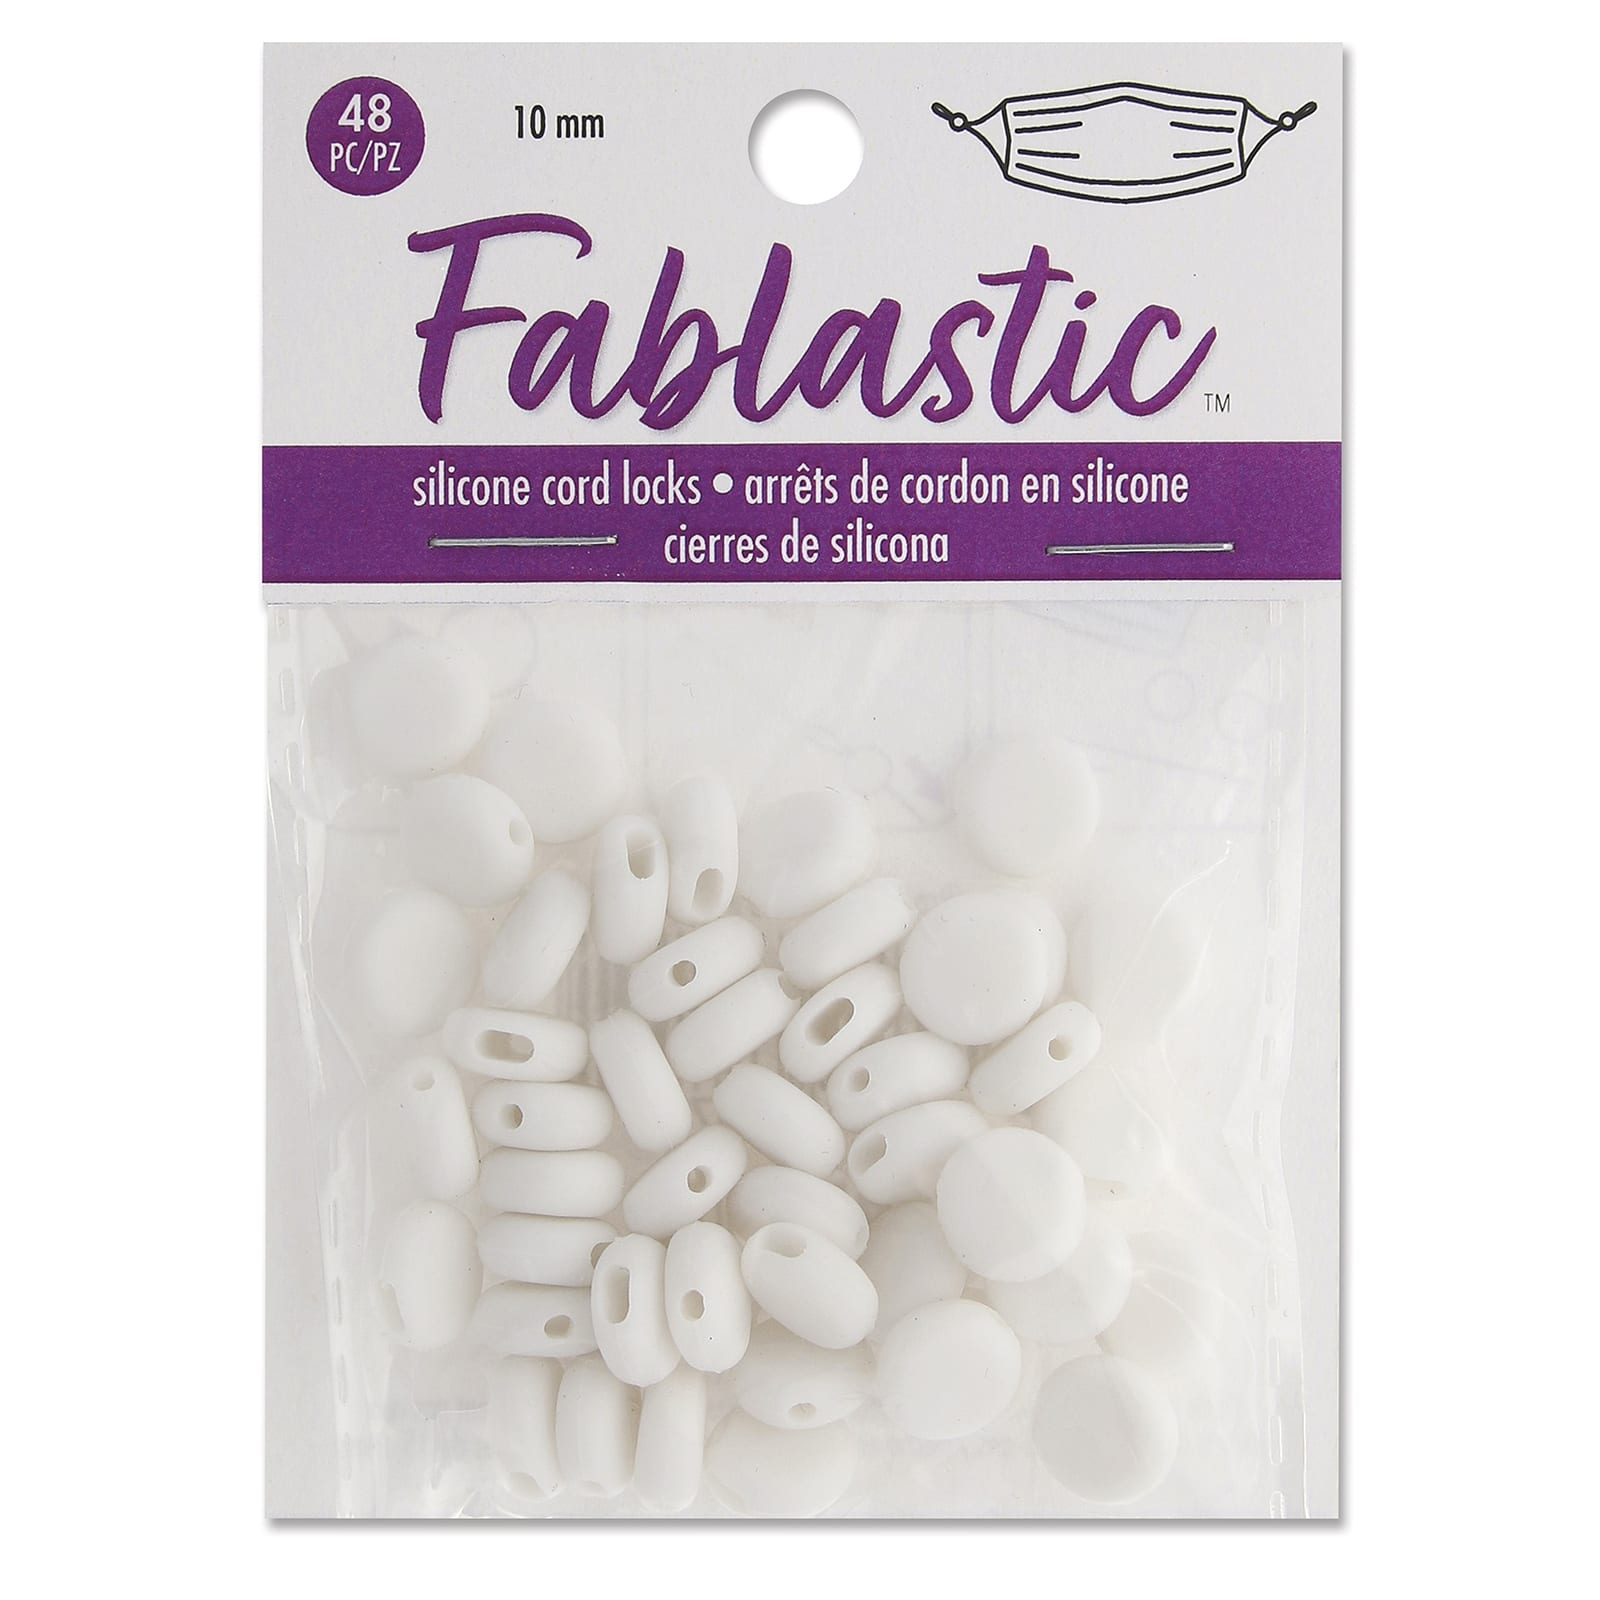 12 Packs: 48 ct. (576 total) Fablastic&#x2122; White Silicone Cord Locks, 10mm